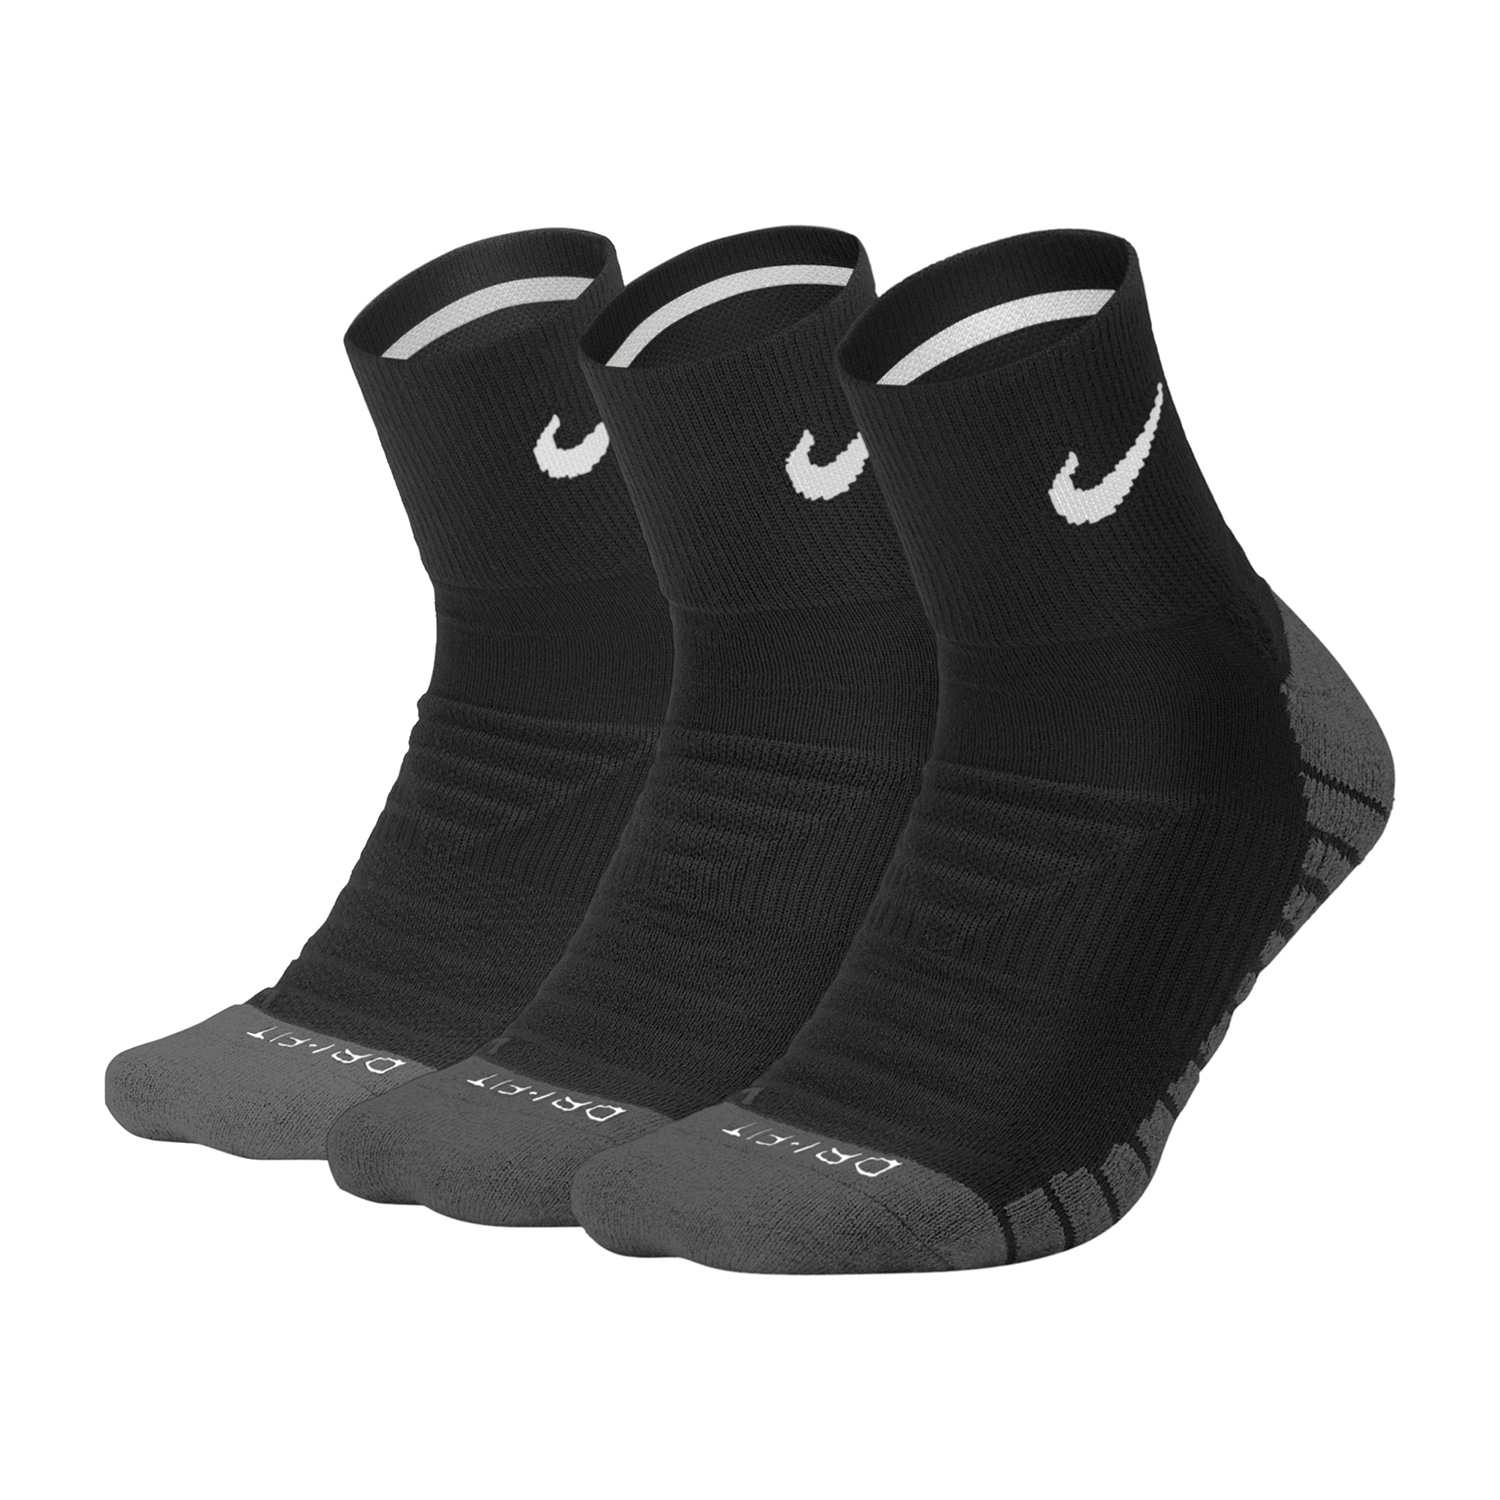 Nike Dry Cushion x 3 Calze - Black/Anthracite/White